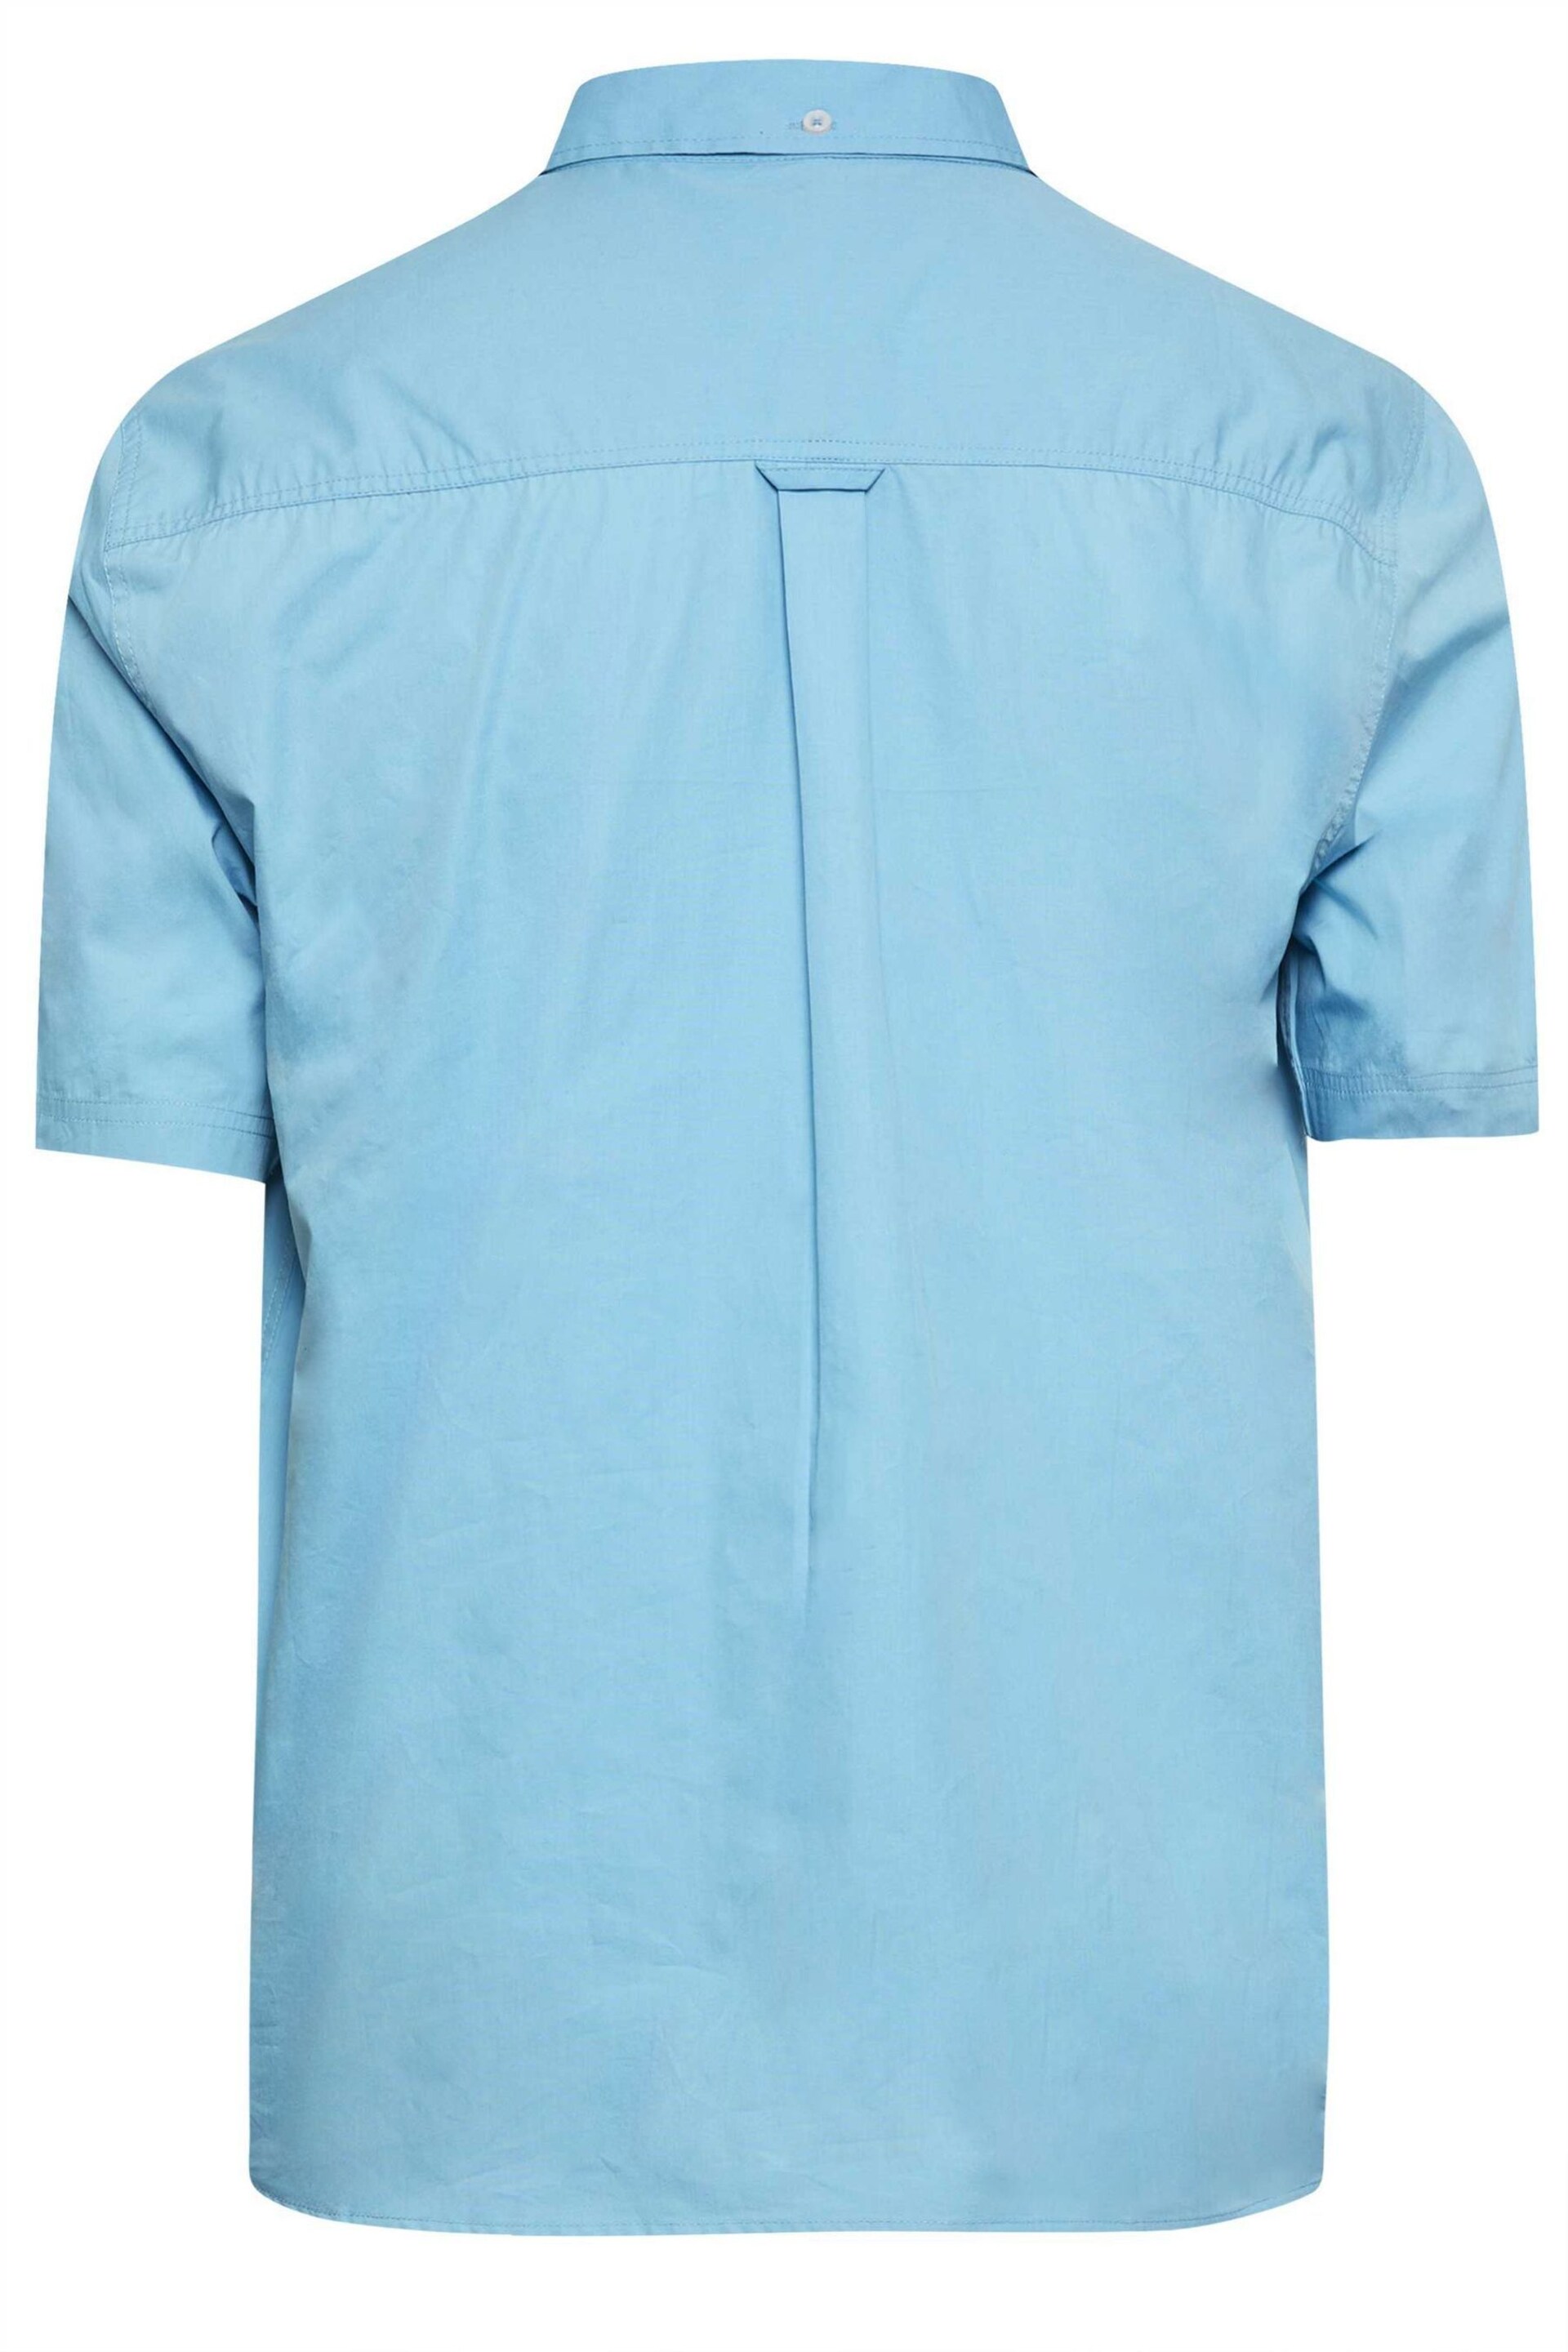 BadRhino Big & Tall Light Blue Short Sleeve Poplin Shirt - Image 3 of 3